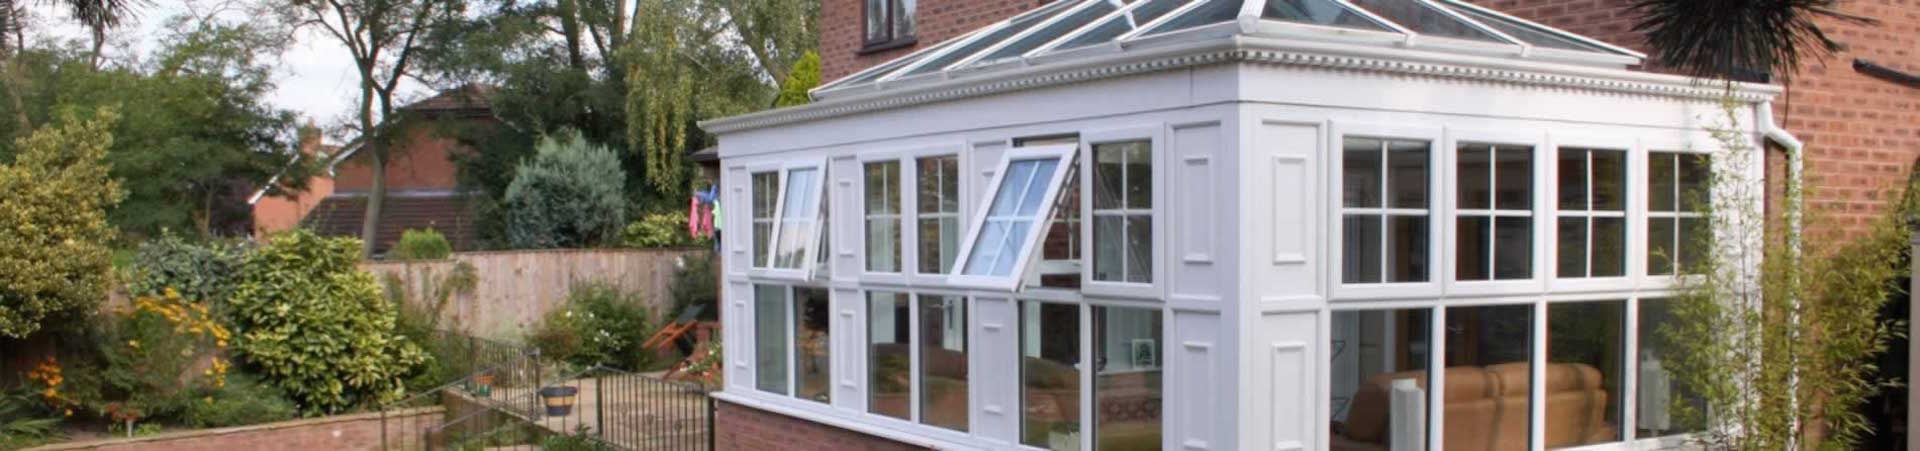 conservatory-windows-main